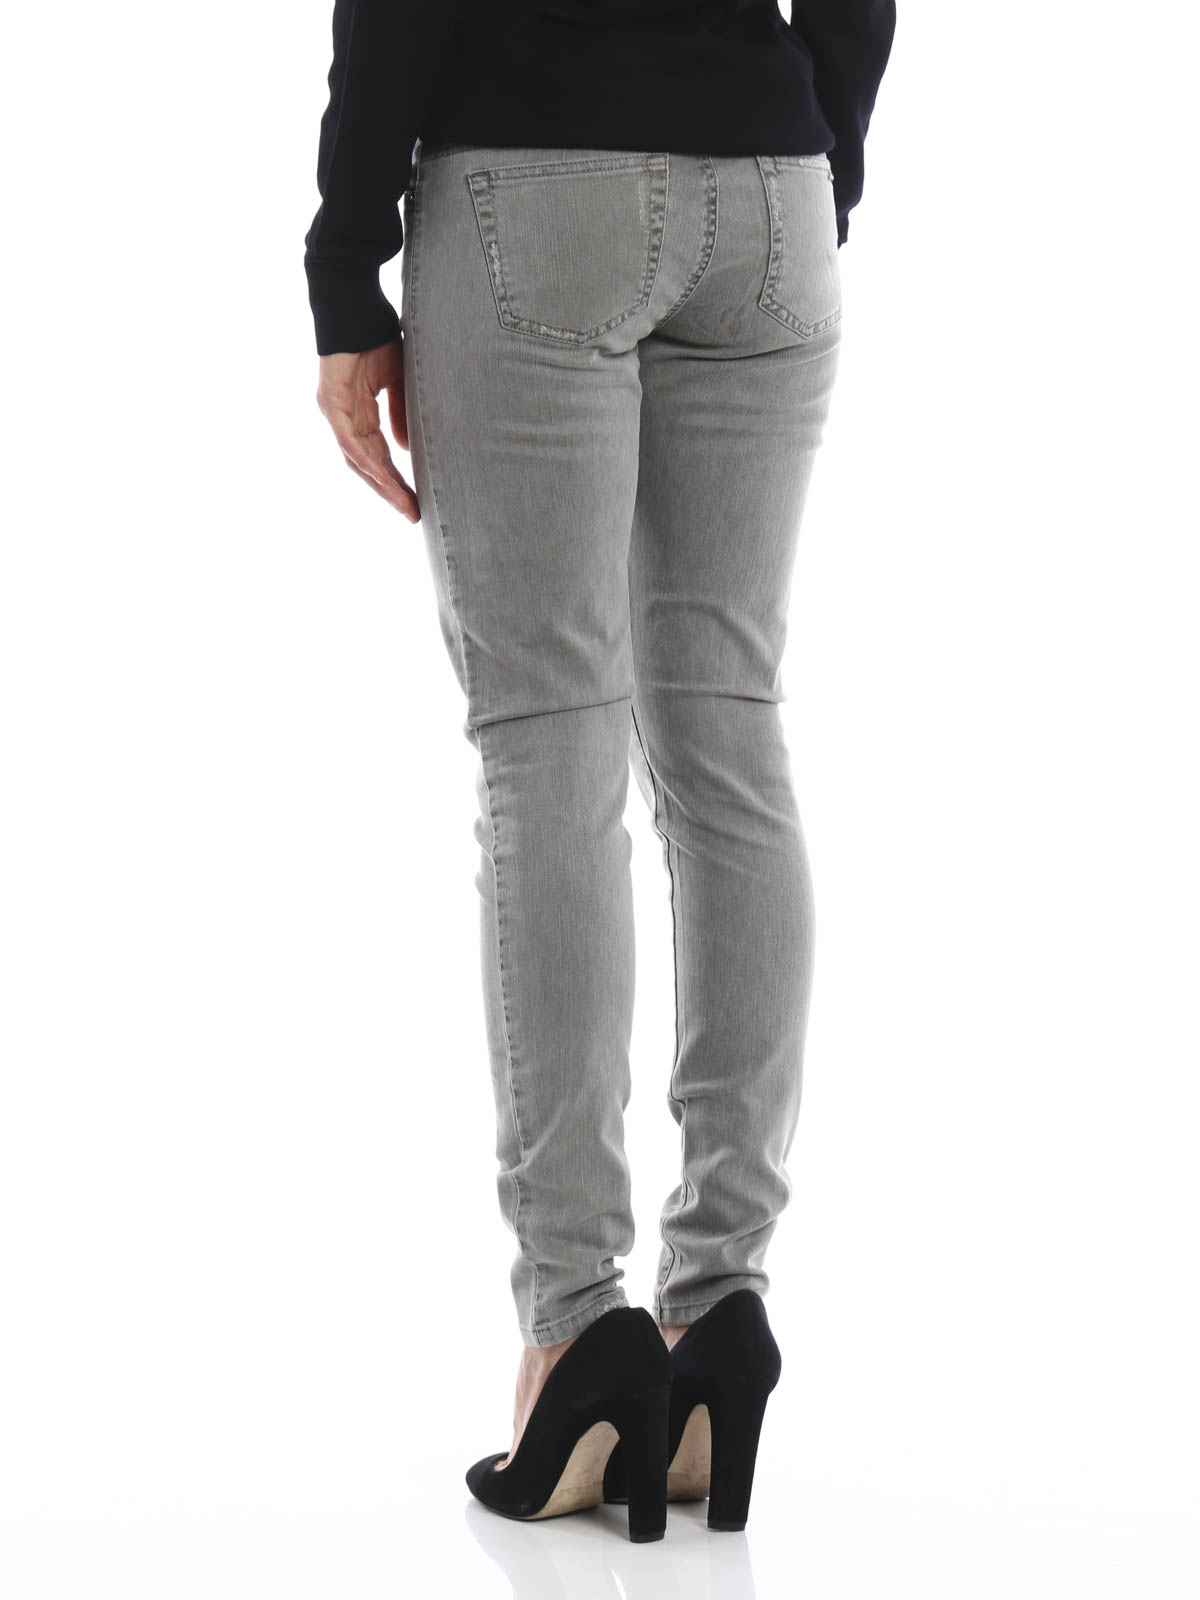 michael kors jeans grey